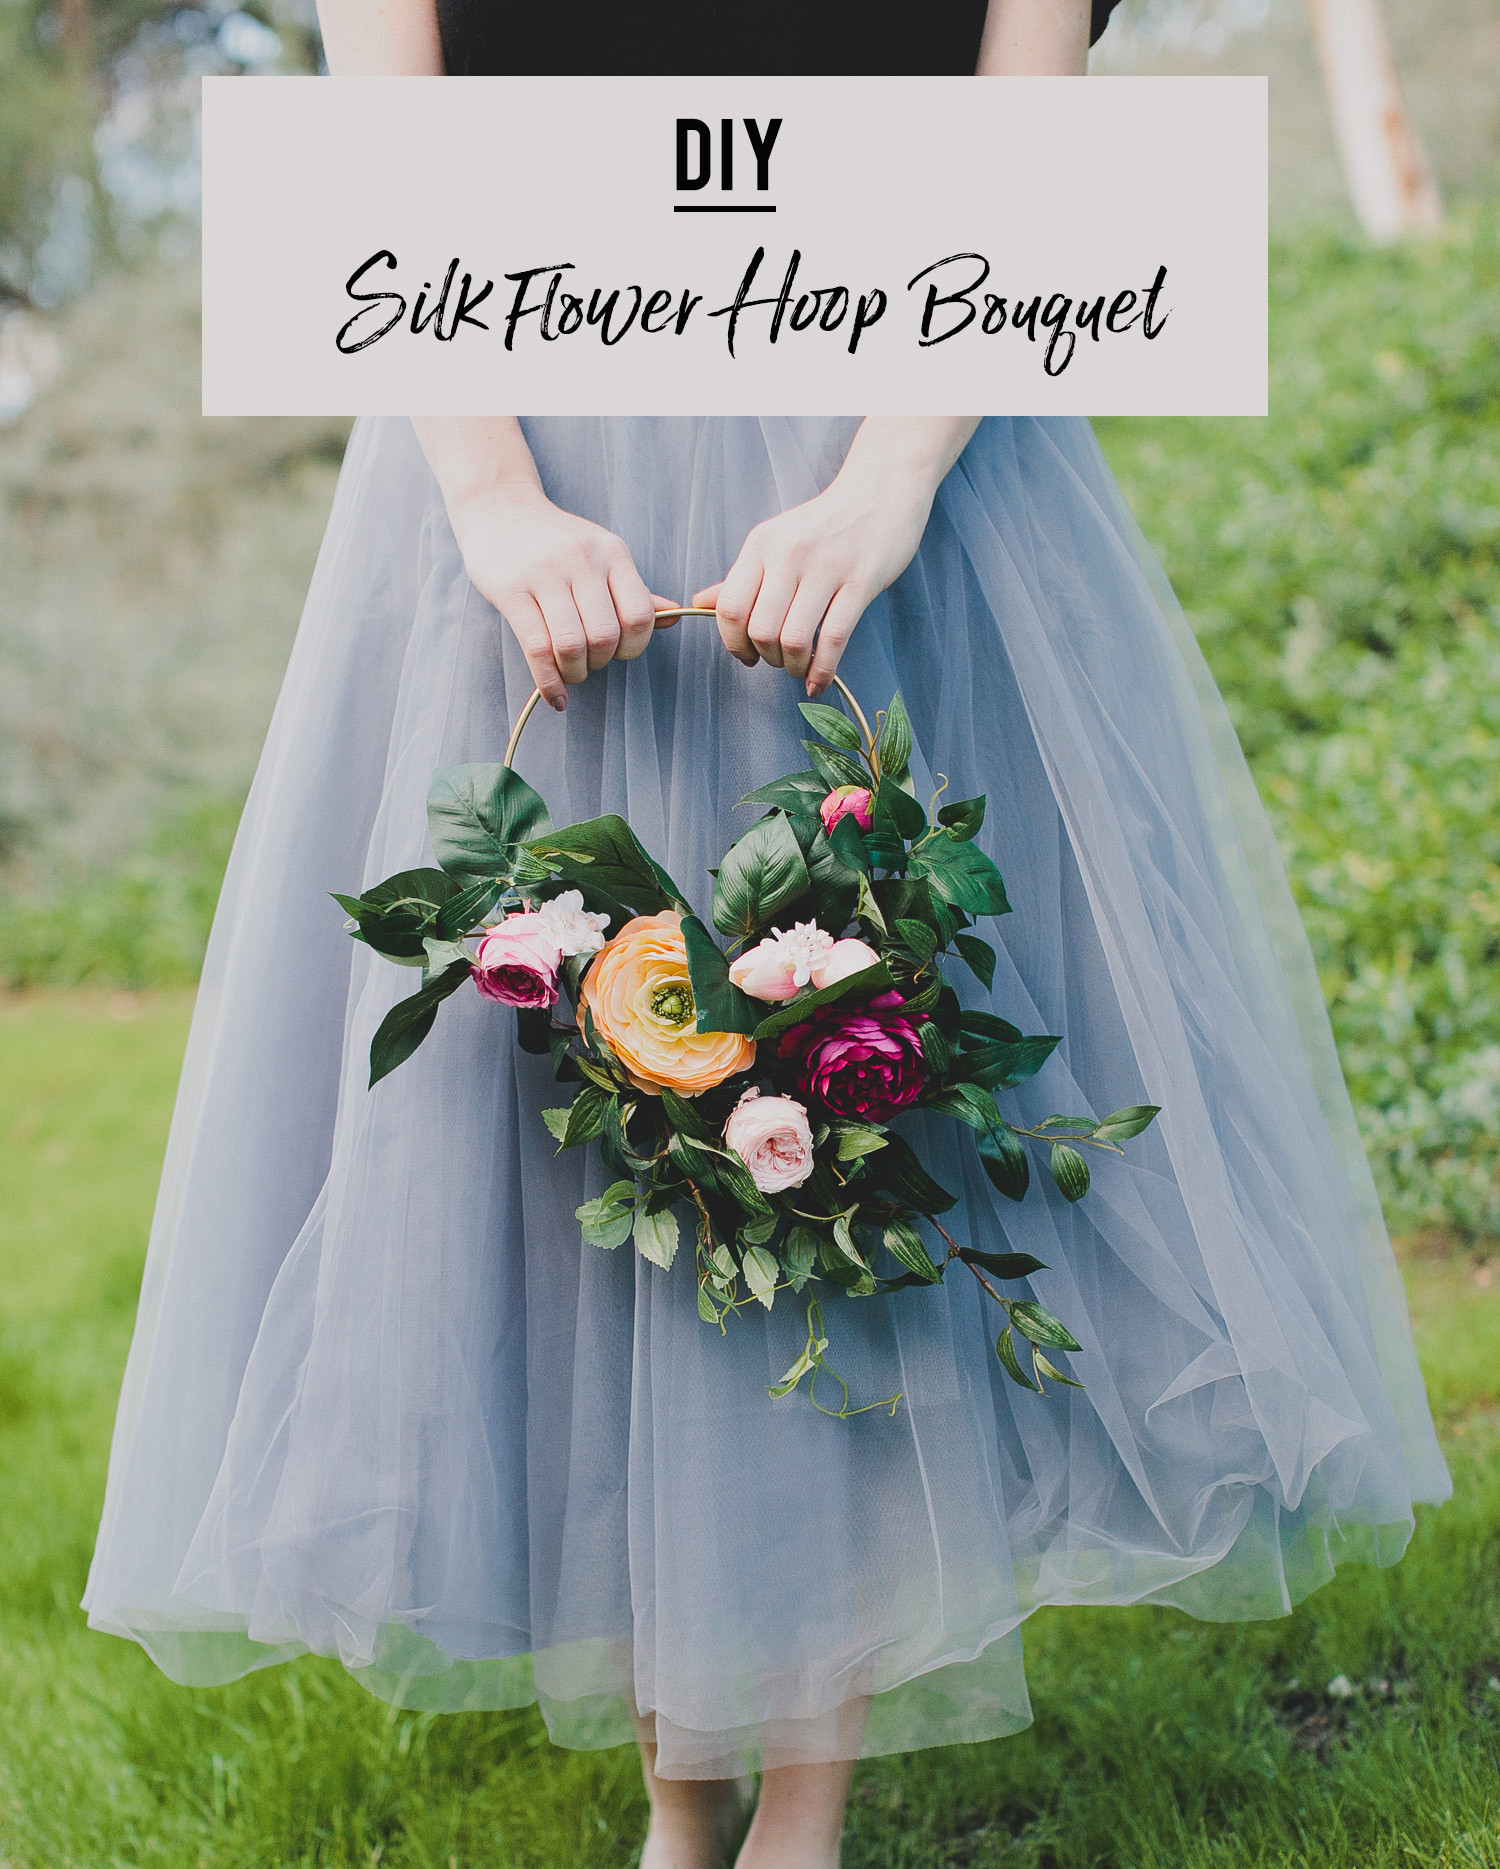 DIY Silk Wedding Bouquet
 DIY Silk Flower Hoop Bouquet